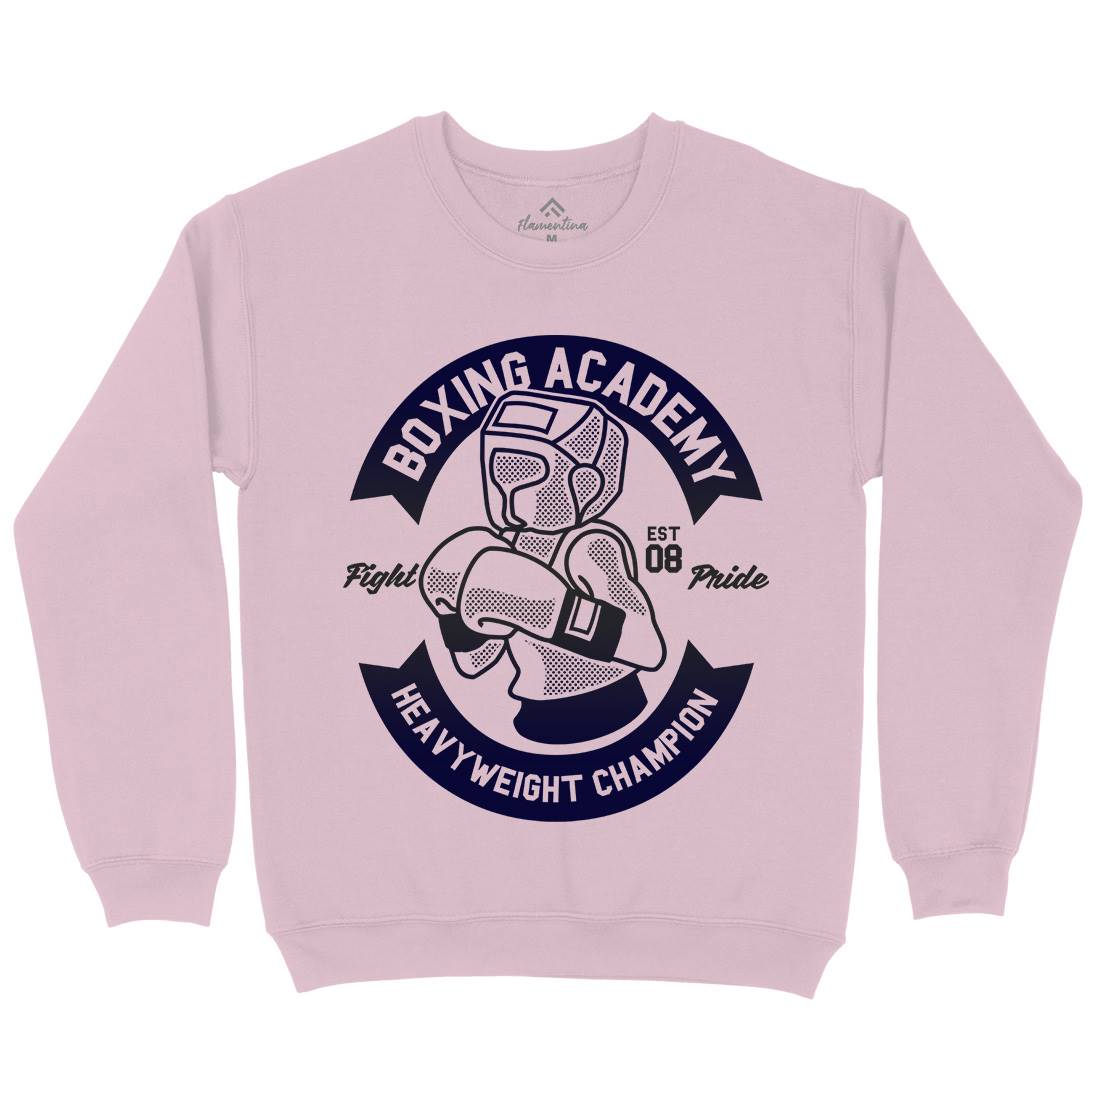 Boxing Academy Kids Crew Neck Sweatshirt Gym A213